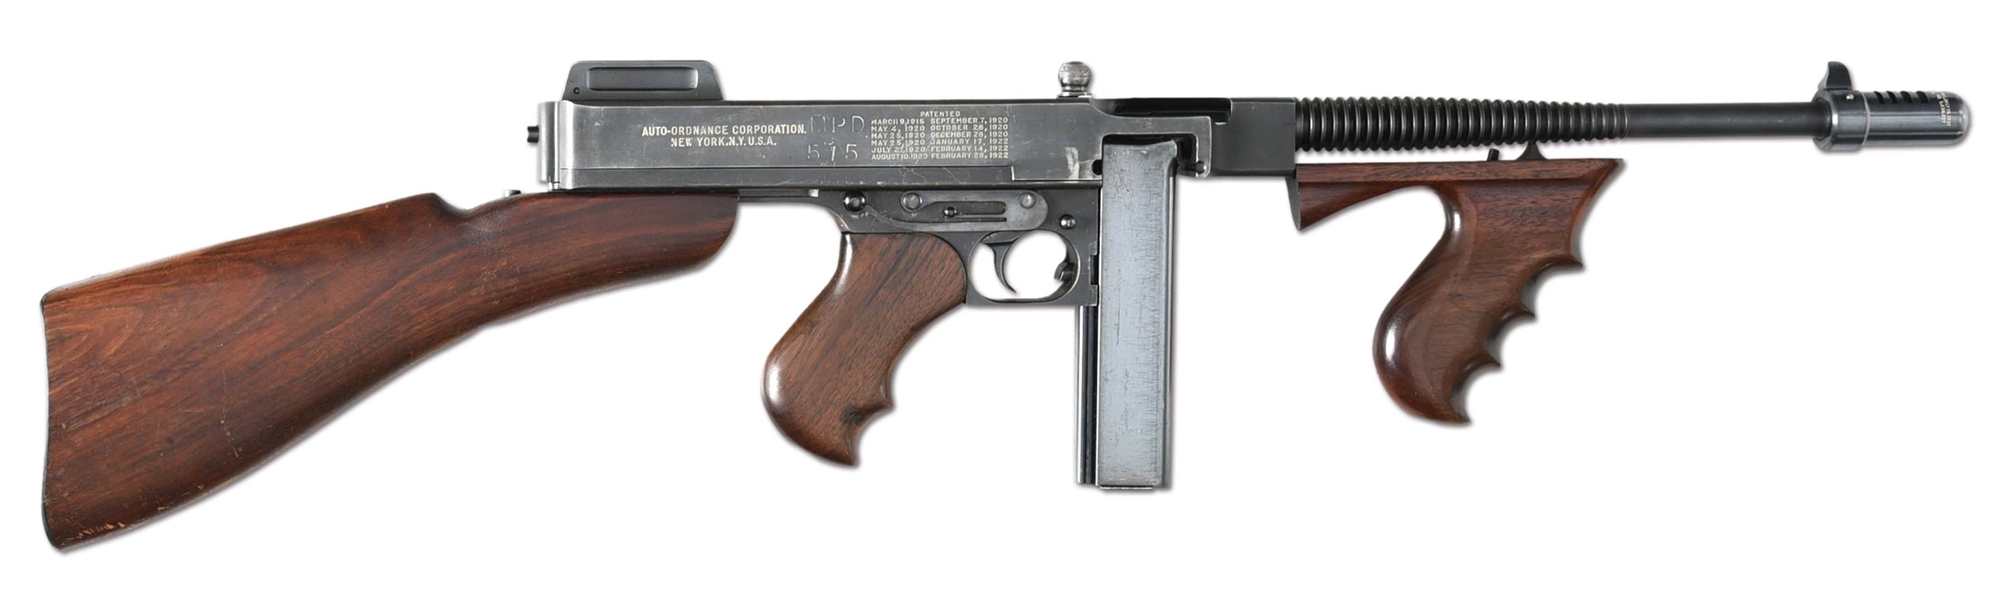 (N) FANTASTIC RARE SAVAGE MANUFACTURED AUTO ORDNANCE COMMERCIAL 1928 THOMPSON MACHINE GUN (CURIO & RELIC).